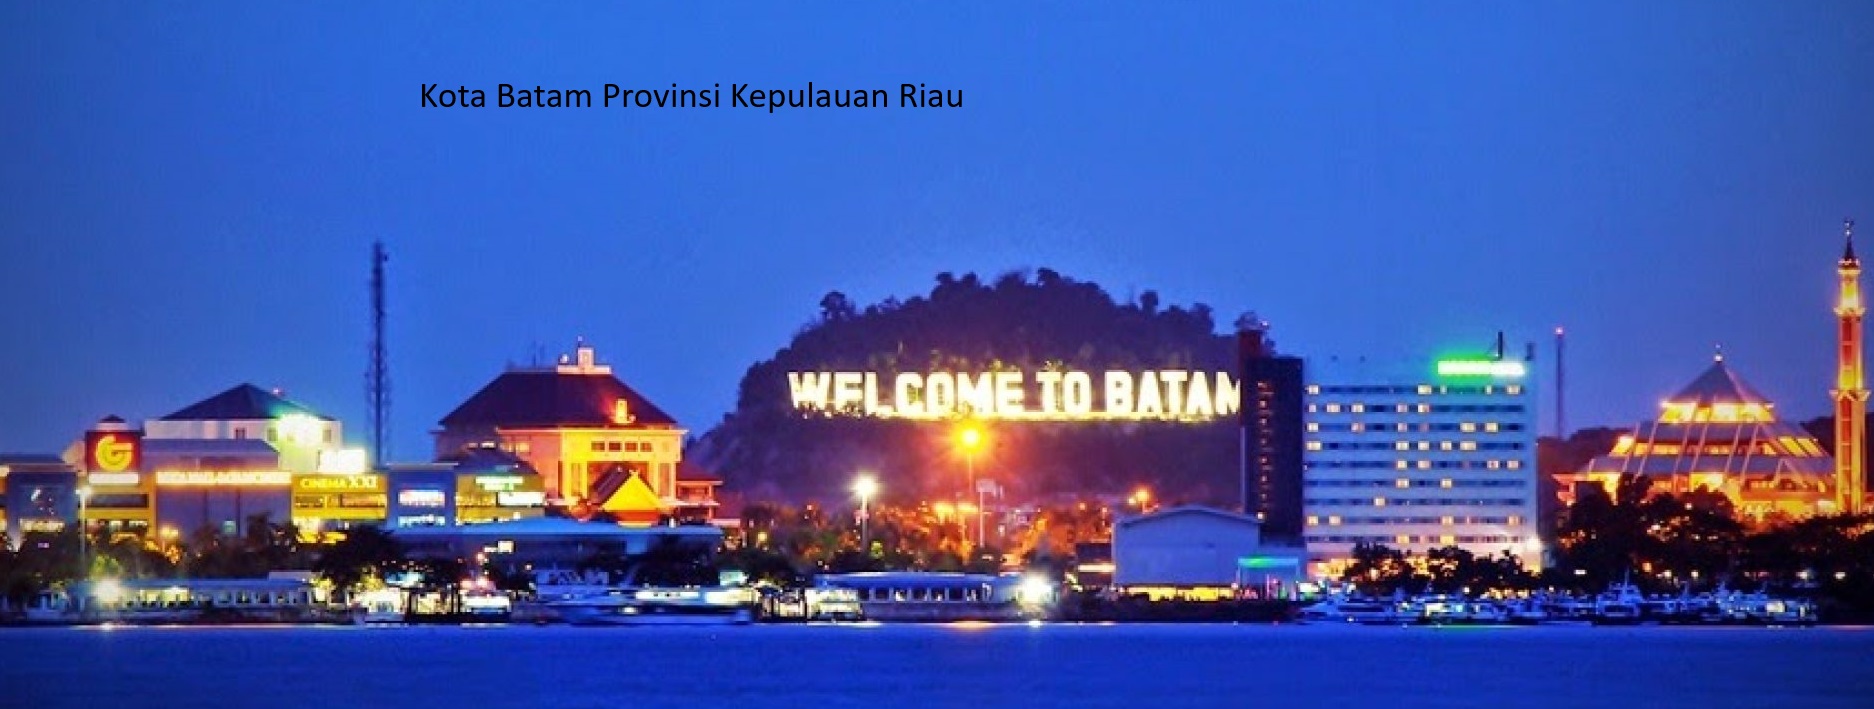 Pemekaran Wilayah Kota Batam di Provinsi Kepulauan Riau: Menuju Masa Depan Lebih Cerah dan Berkembang